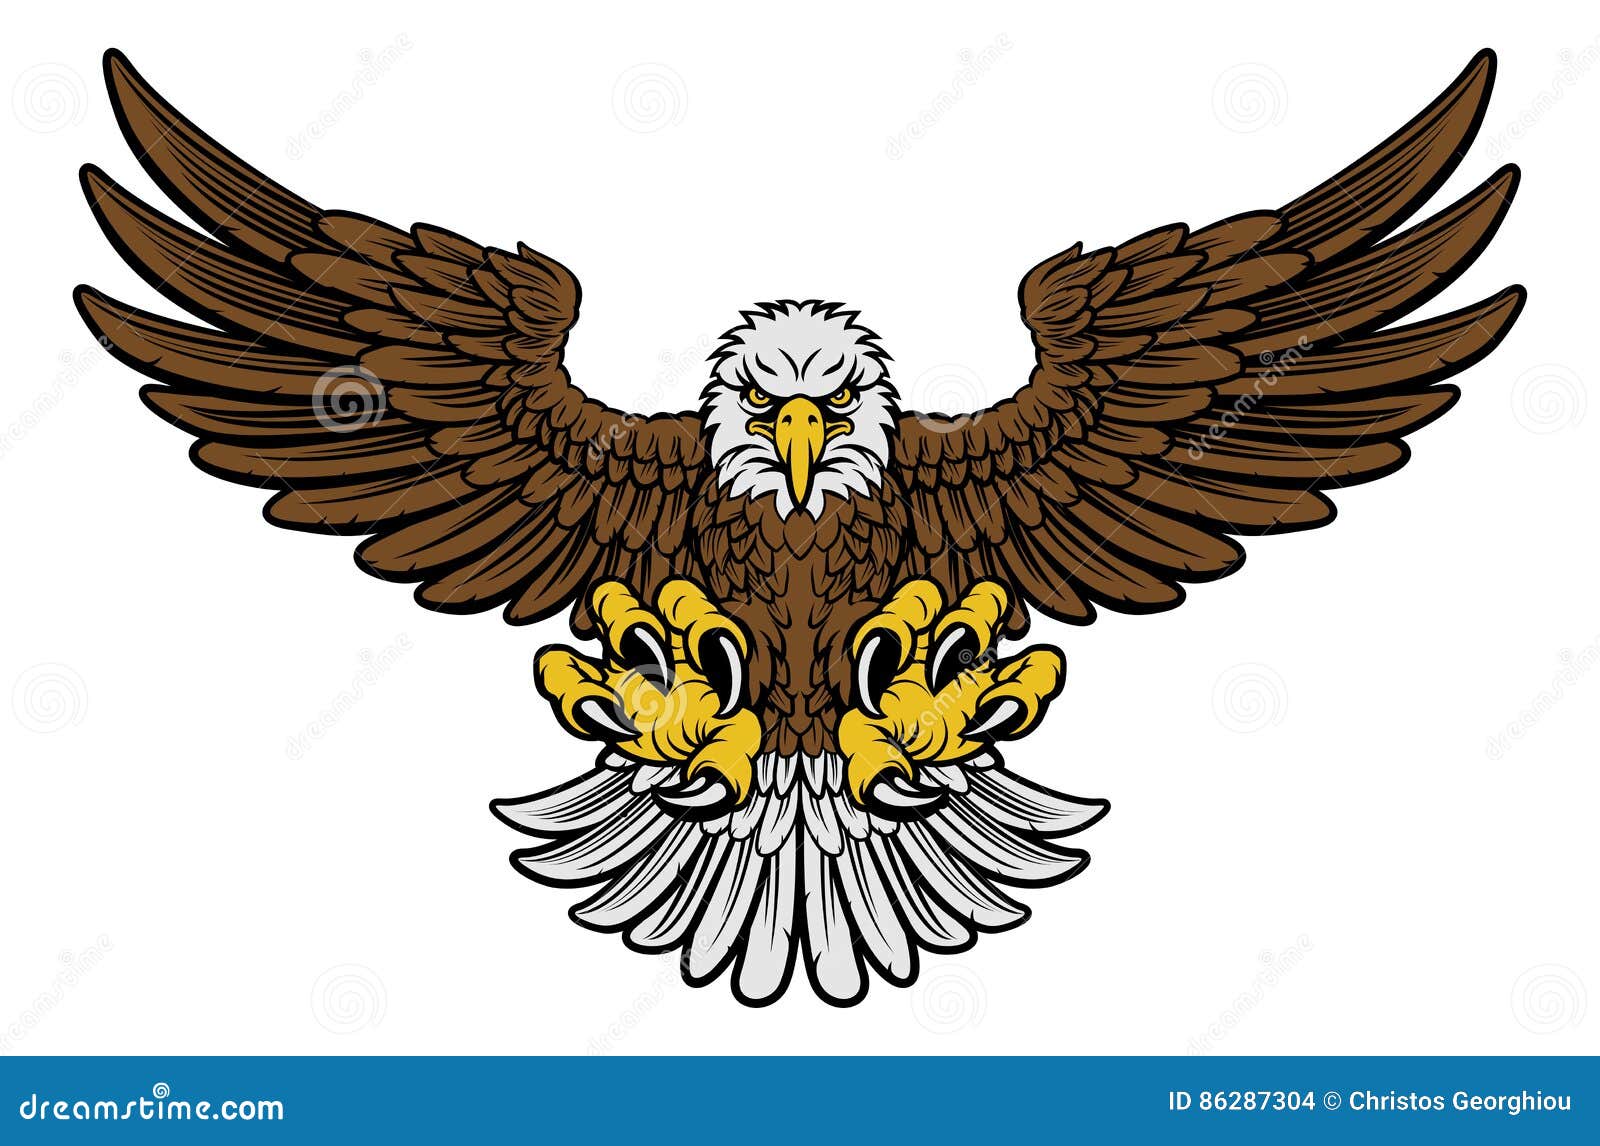 bald eagle mascot